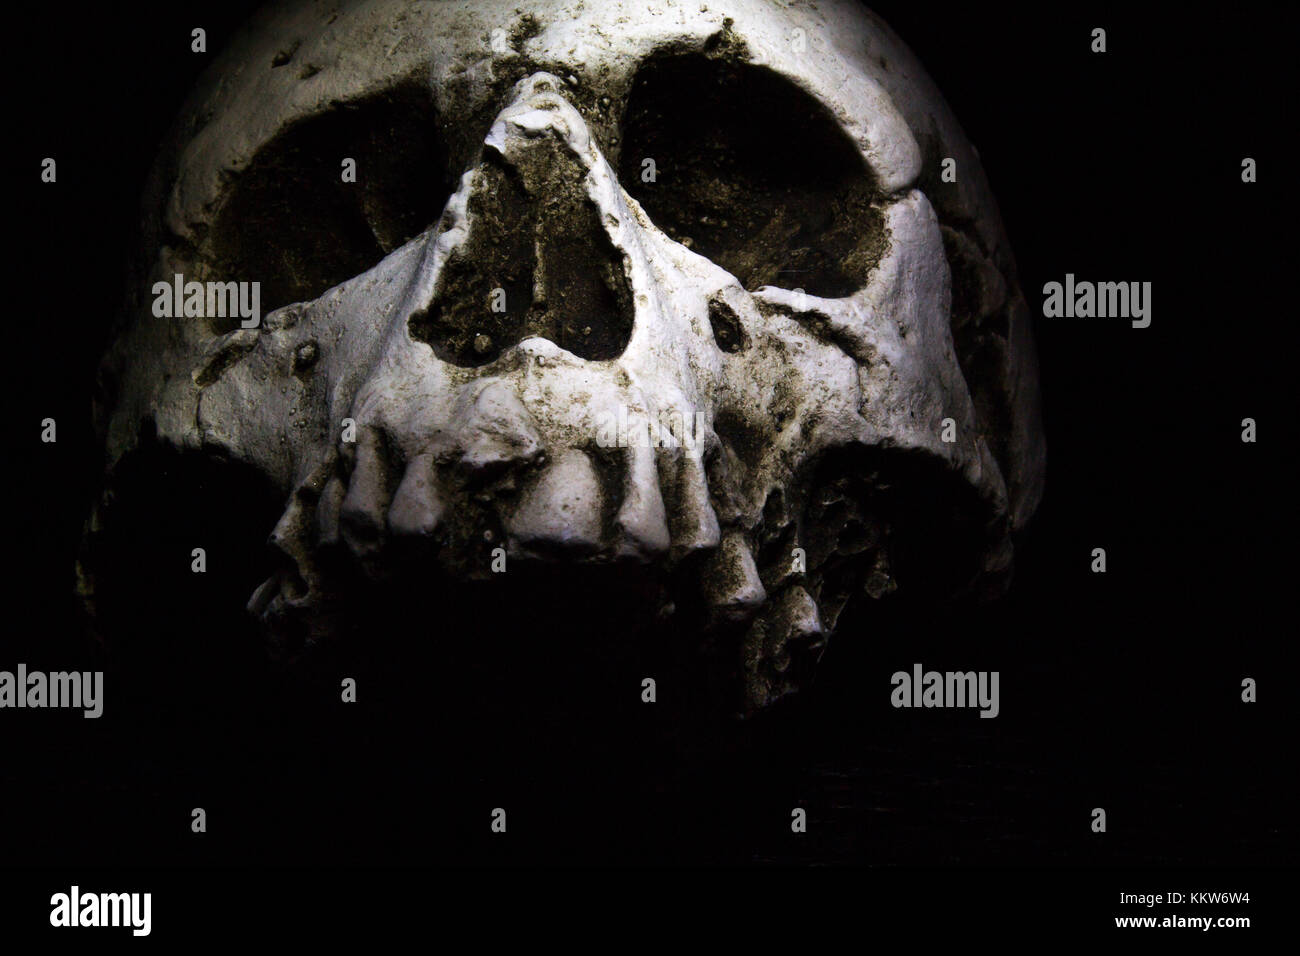 A human skull on a dark background. Stock Photo